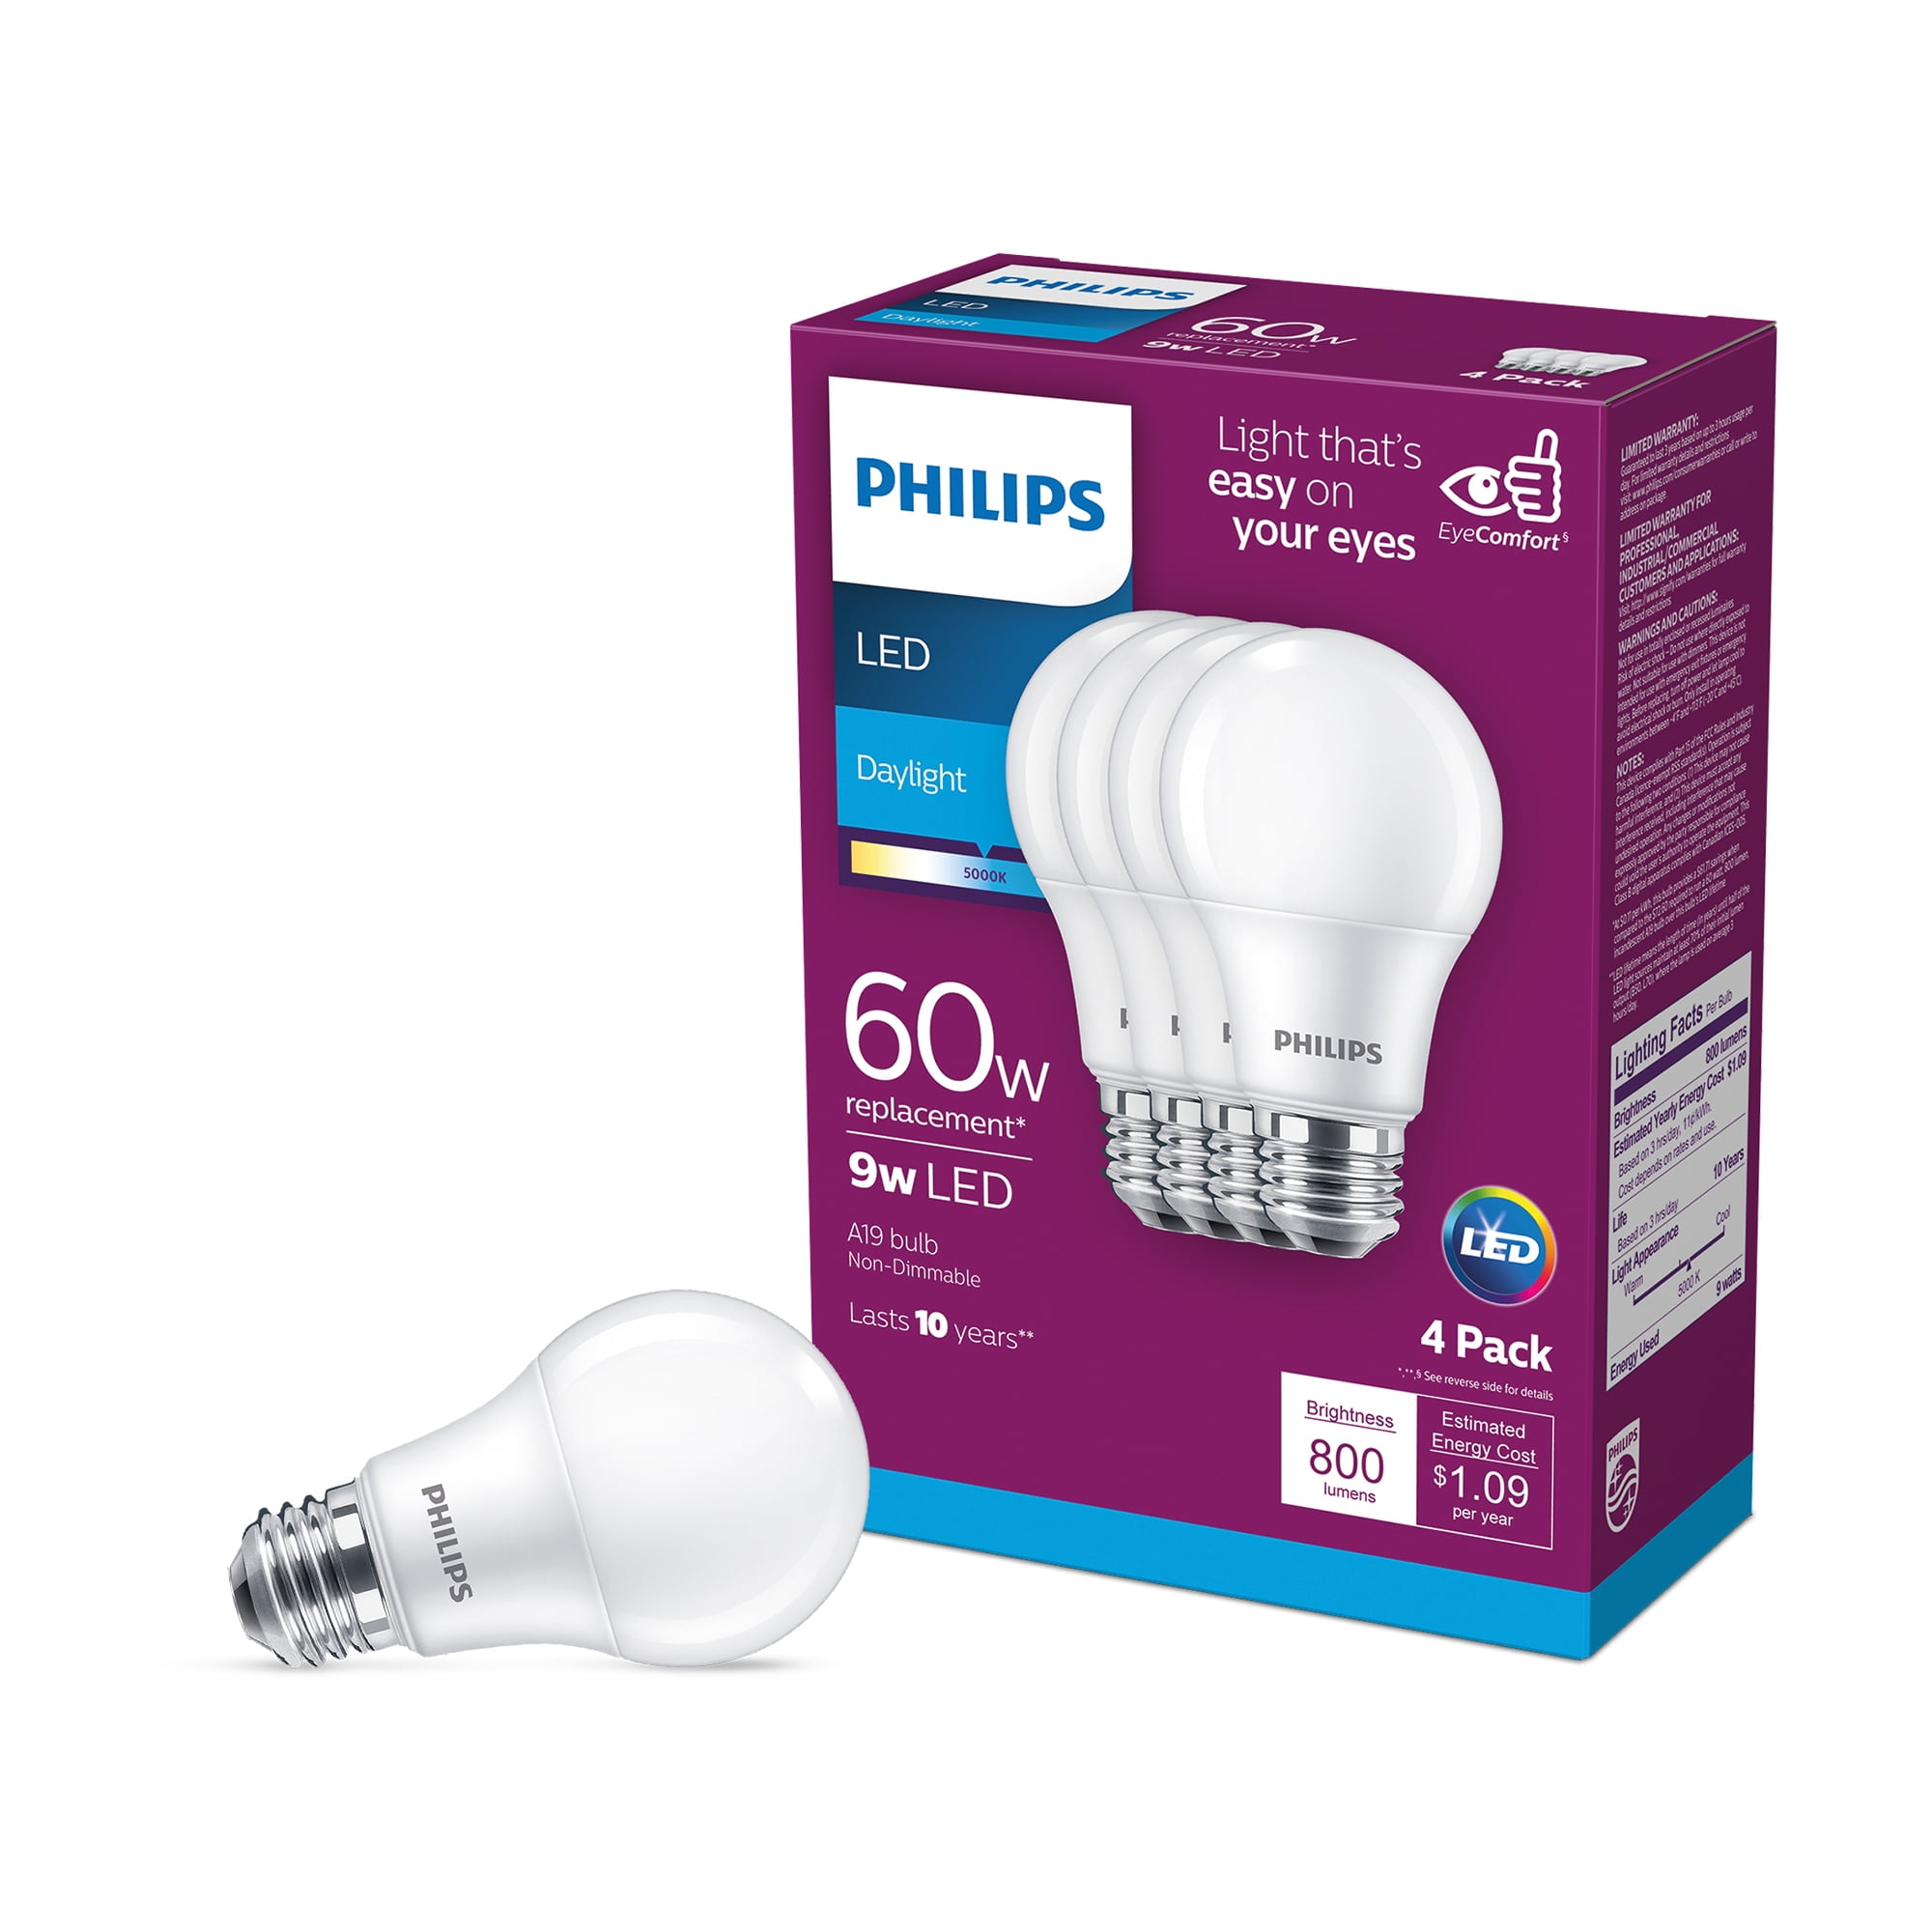 Philips LED Daylight A19 Light Bulb 9 Watt, 4 Pack